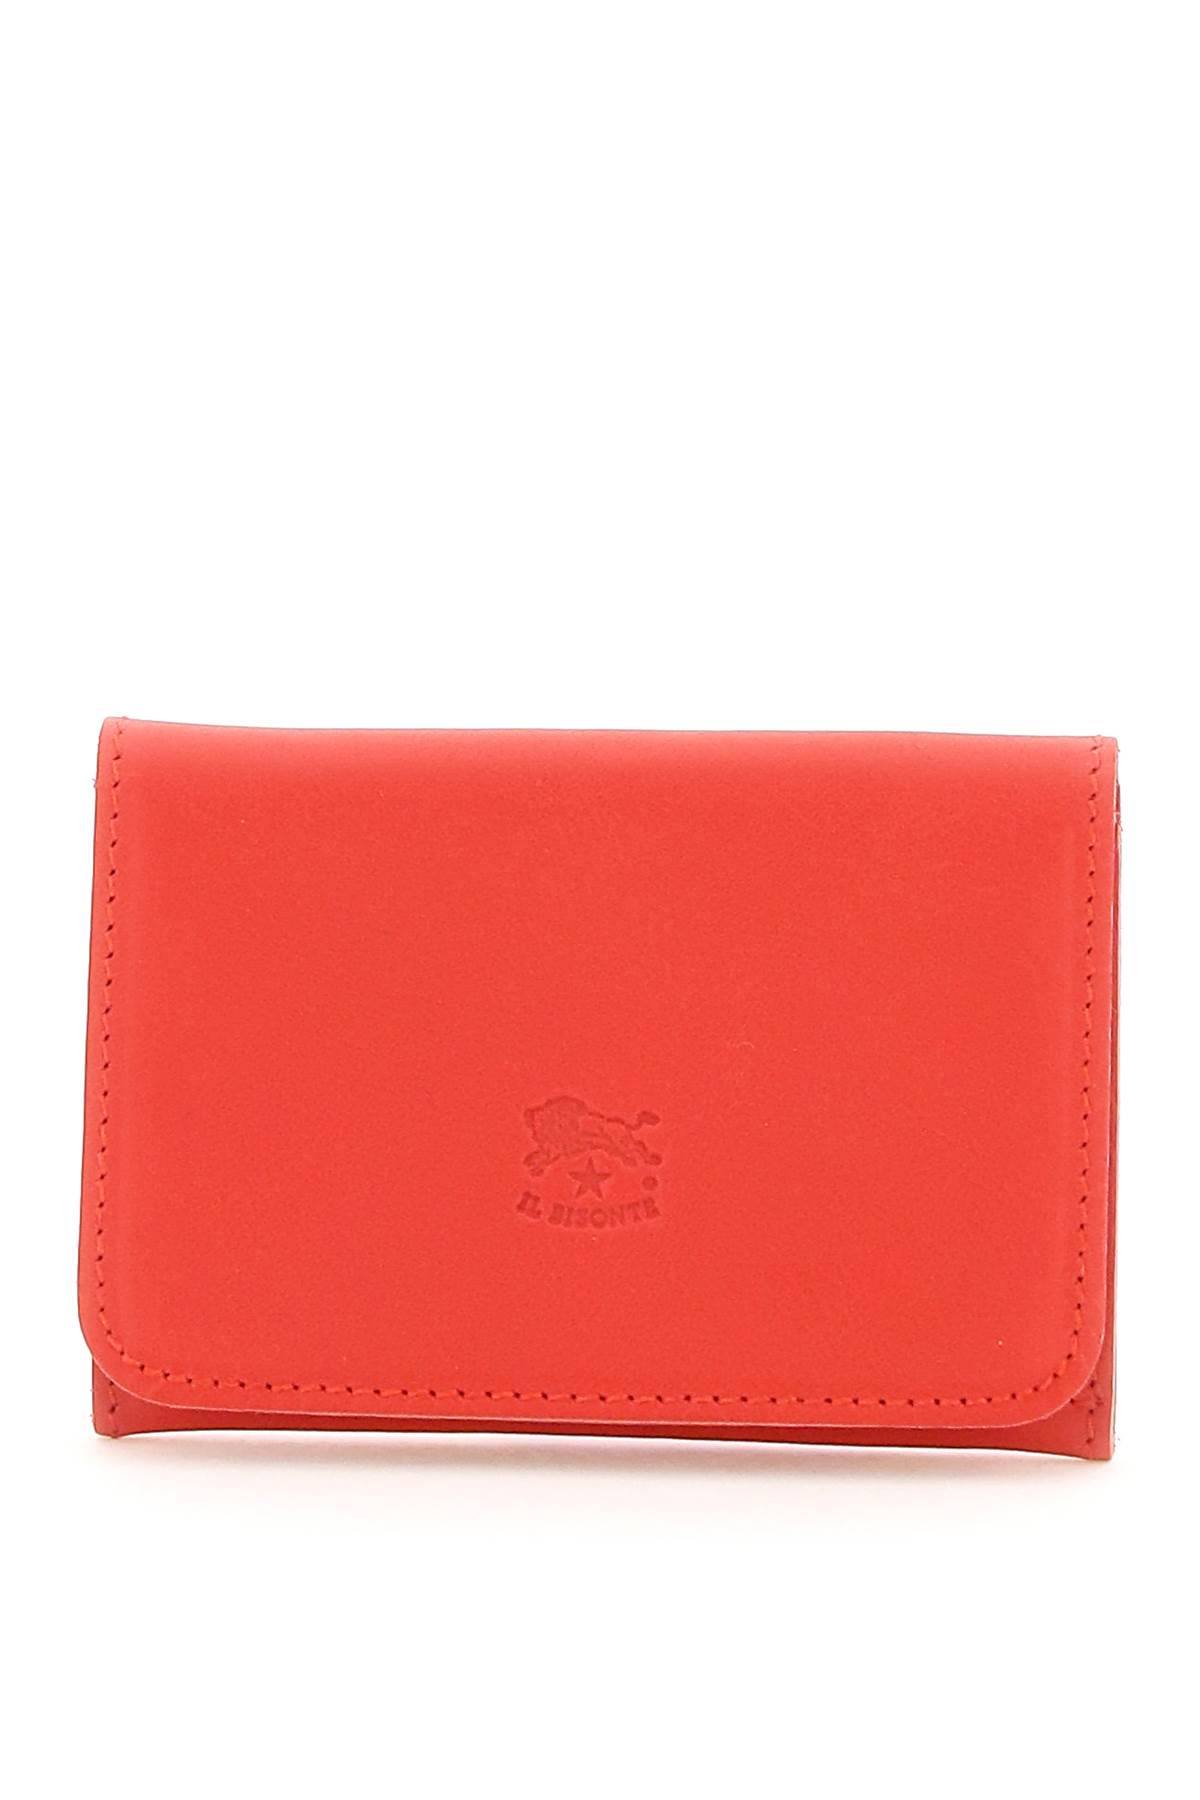 Il Bisonte Leather Cardholder In Castagno Rosa (red)